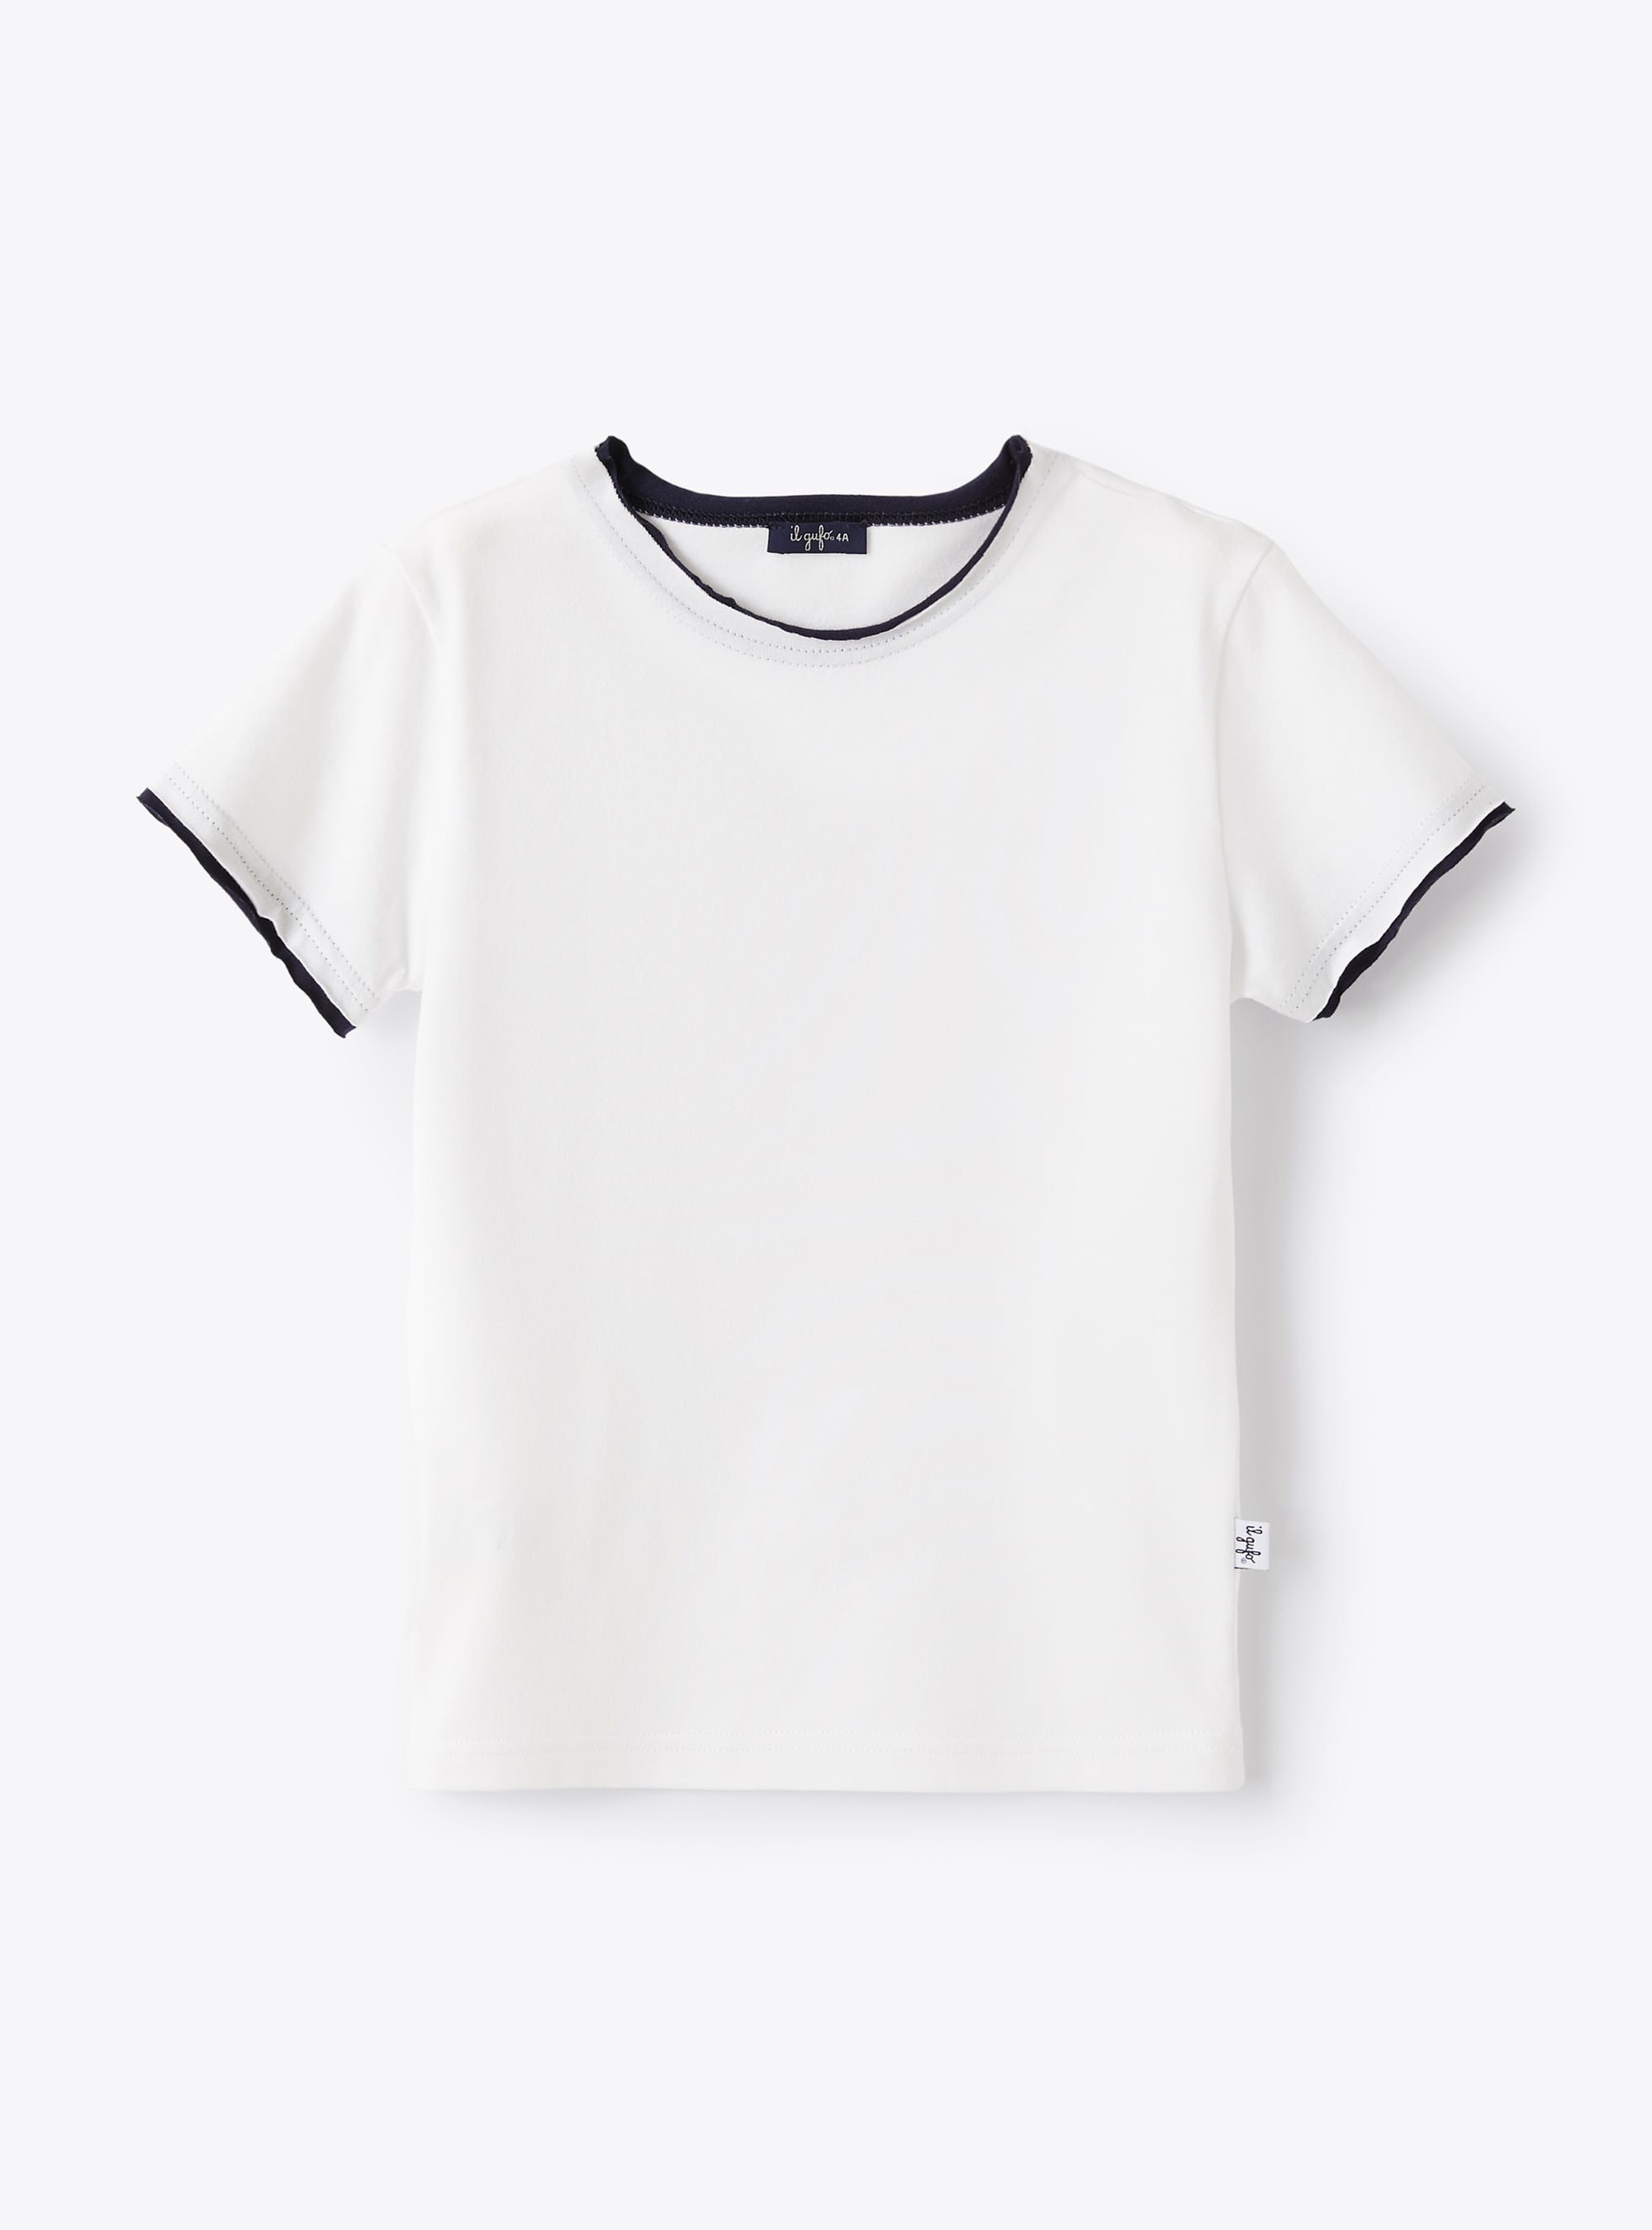 White t-shirt with blue trim - White | Il Gufo